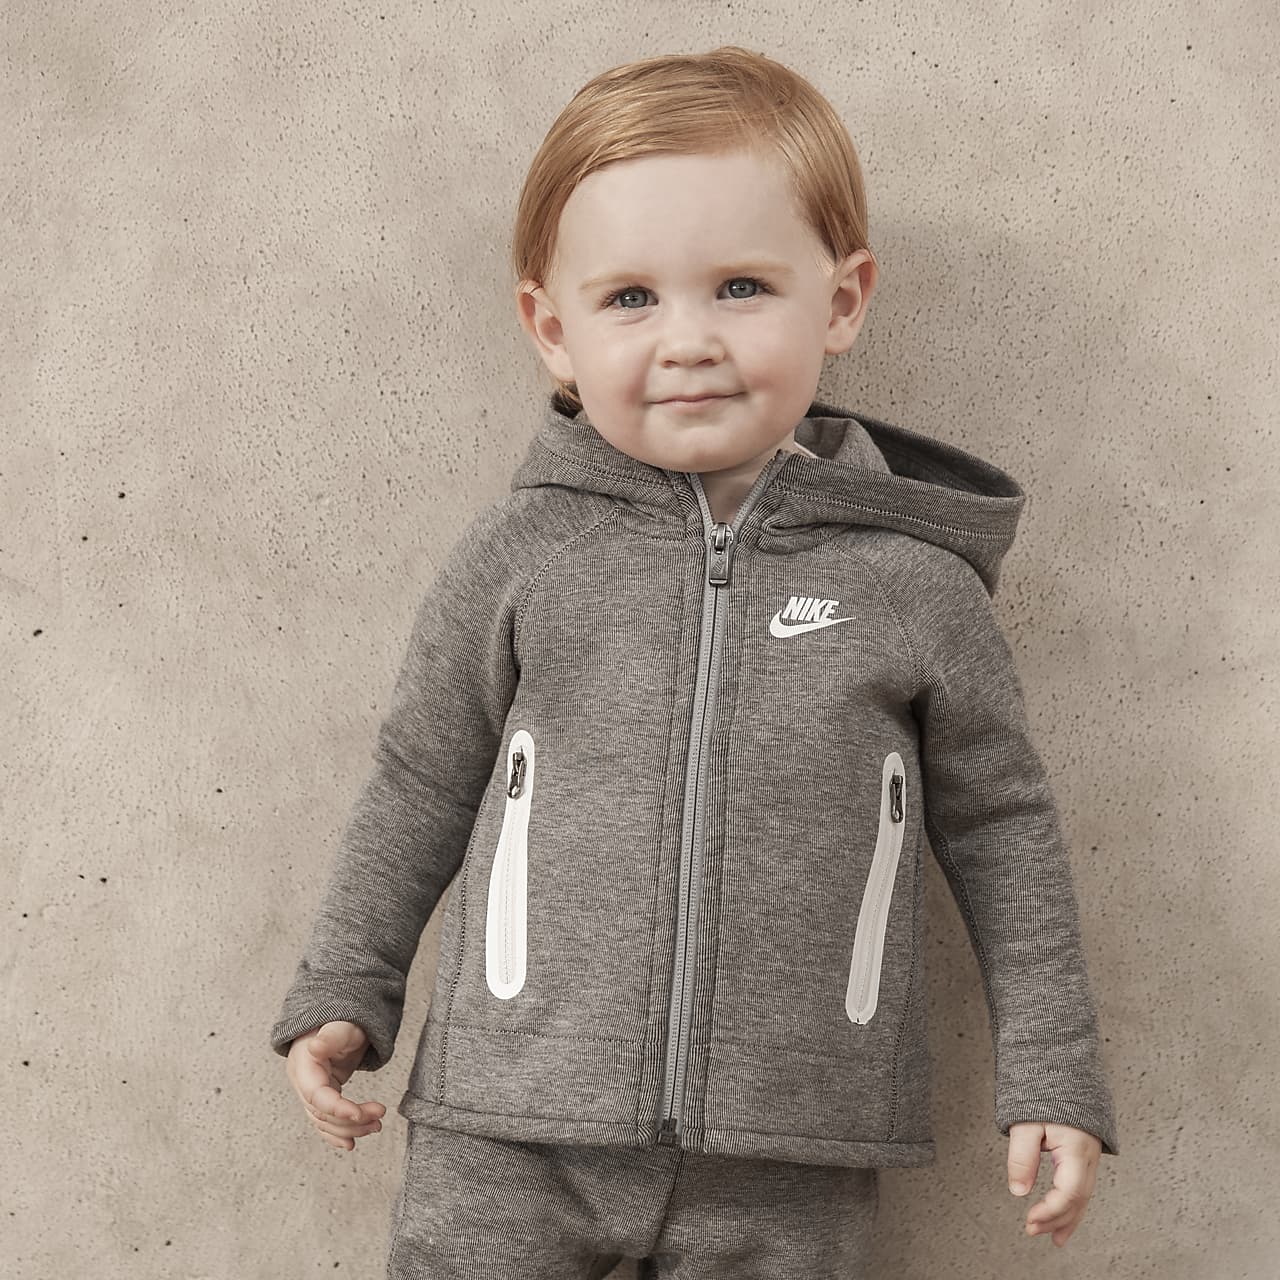 Secretaris scheuren Kliniek Nike Sportswear Tech Fleece Baby (12-24M) Hoodie and Pants Set. Nike.com